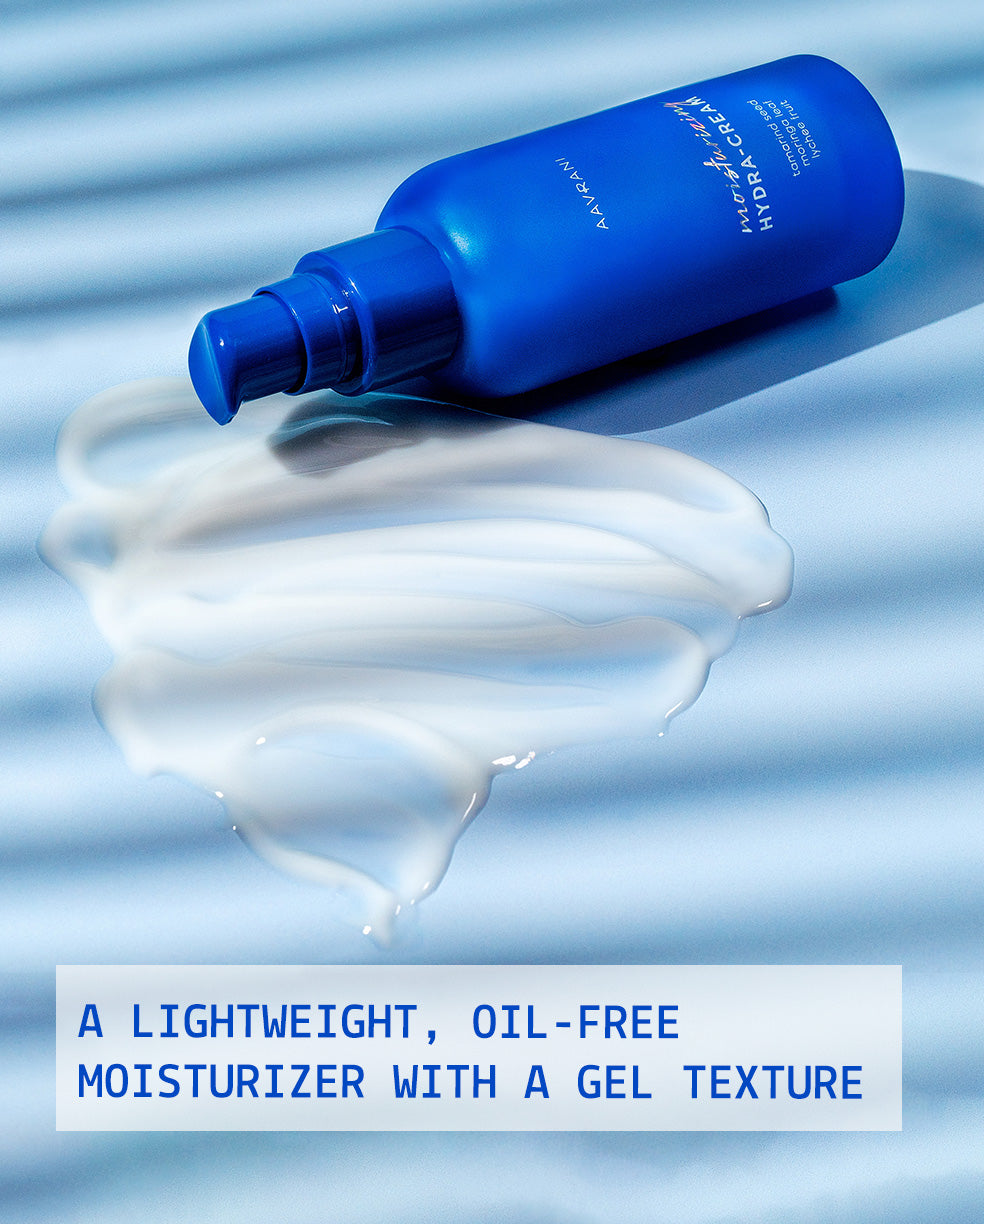 AAVRANI Moisturizing Hydra-Cream Texture Swatch Against Blue Background. A lightweight, oil-free moisturizer with a gel texture.